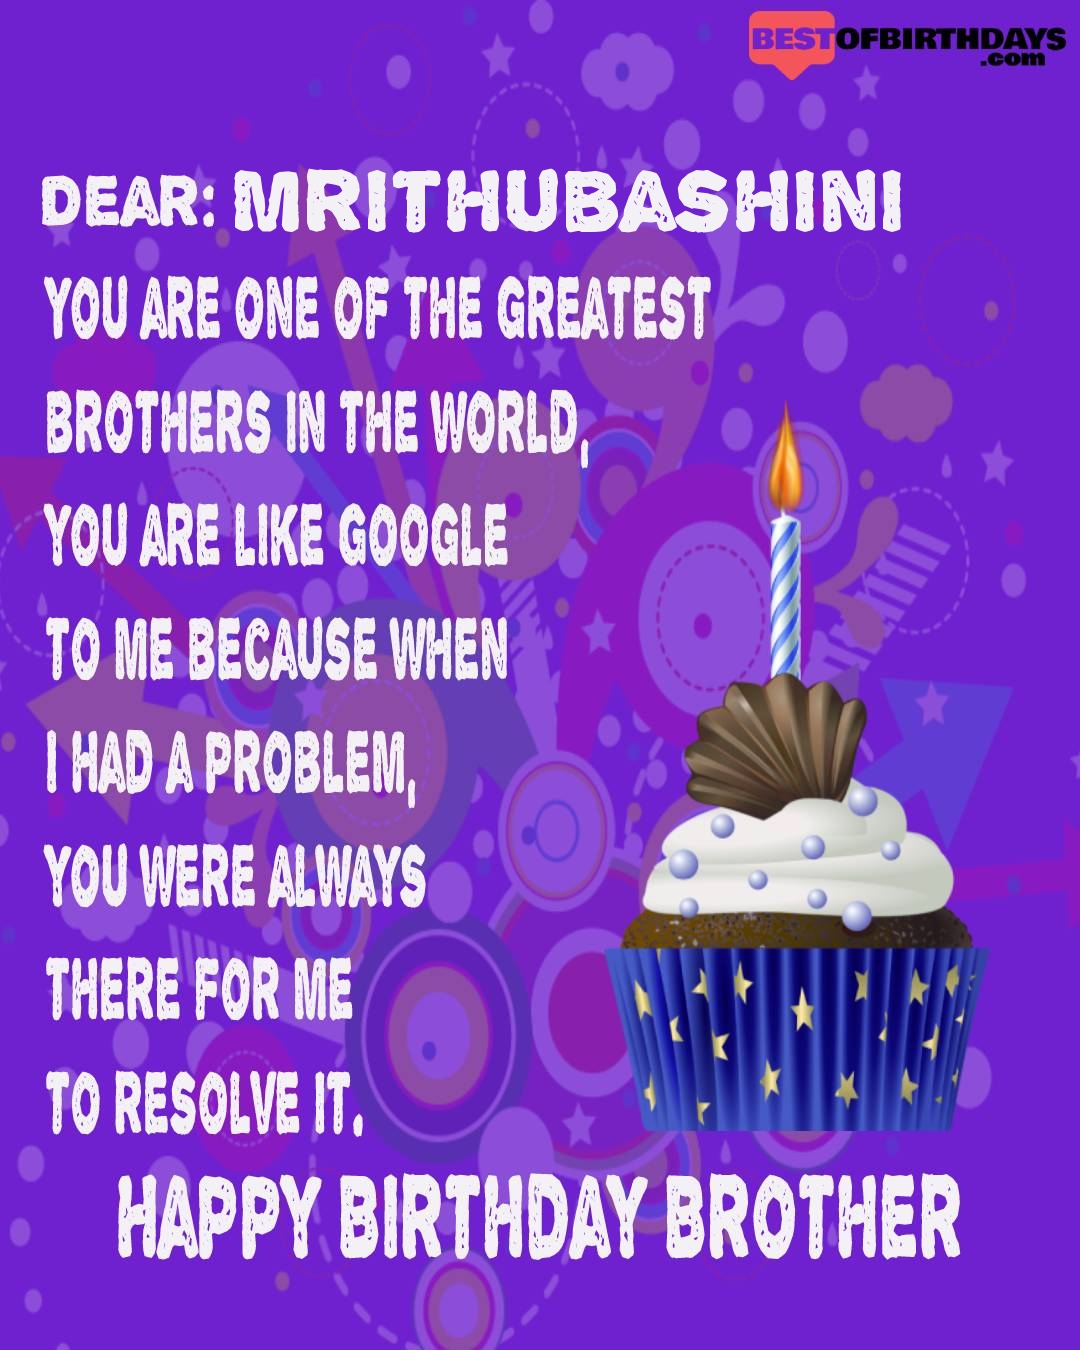 Happy birthday mrithubashini bhai brother bro